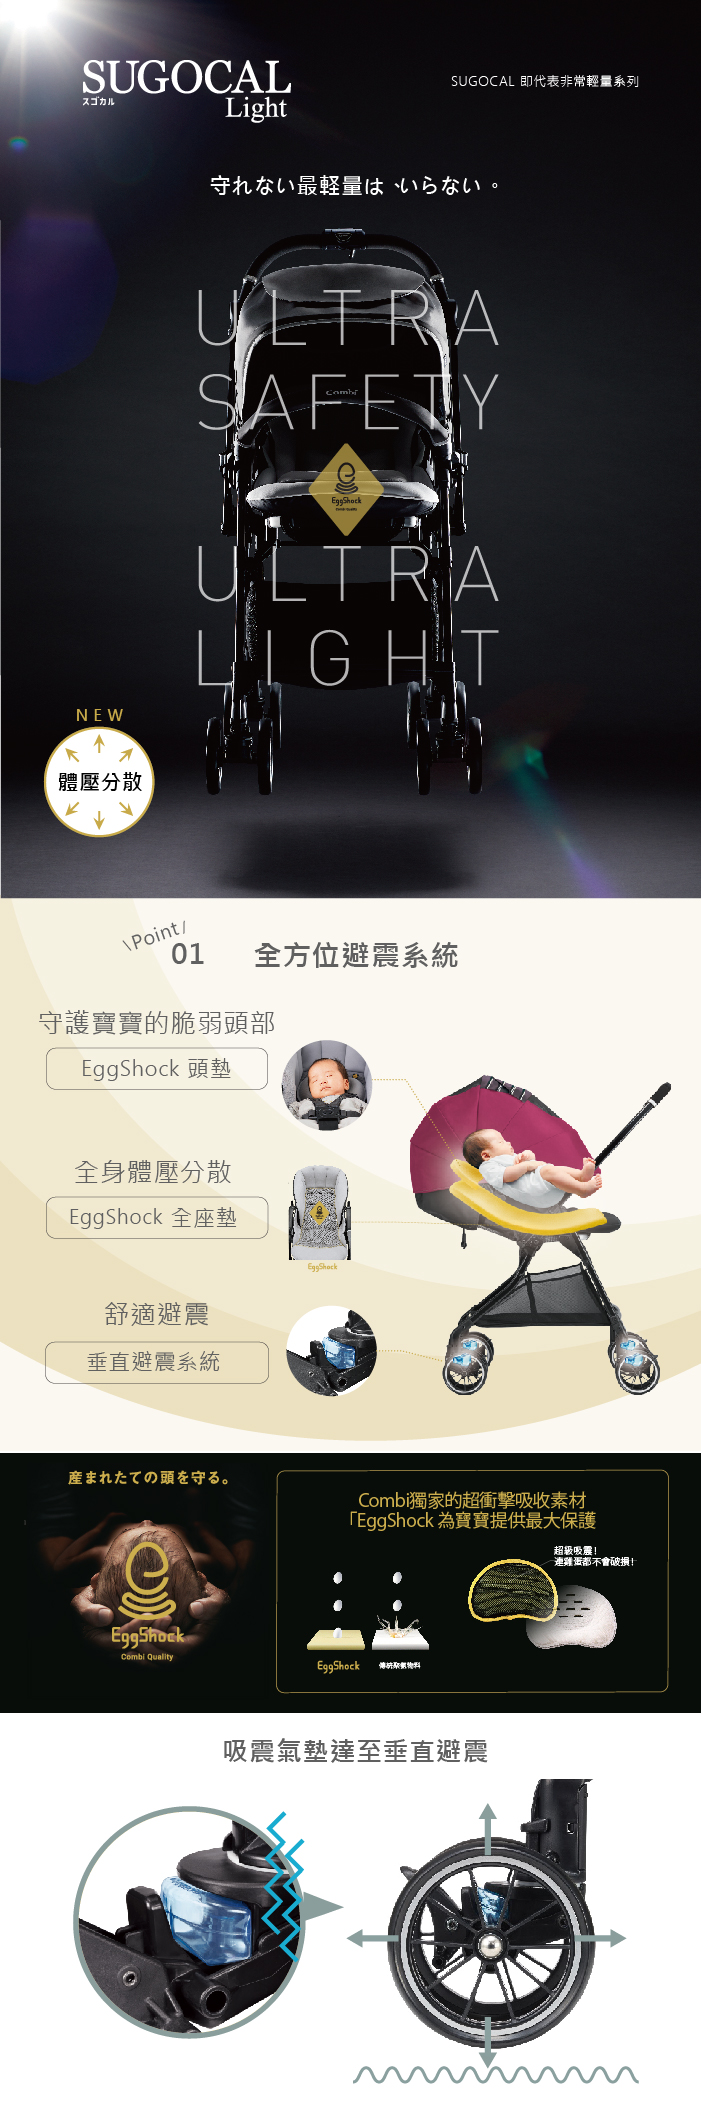 日本 Combi Sugocal Light 嬰兒車